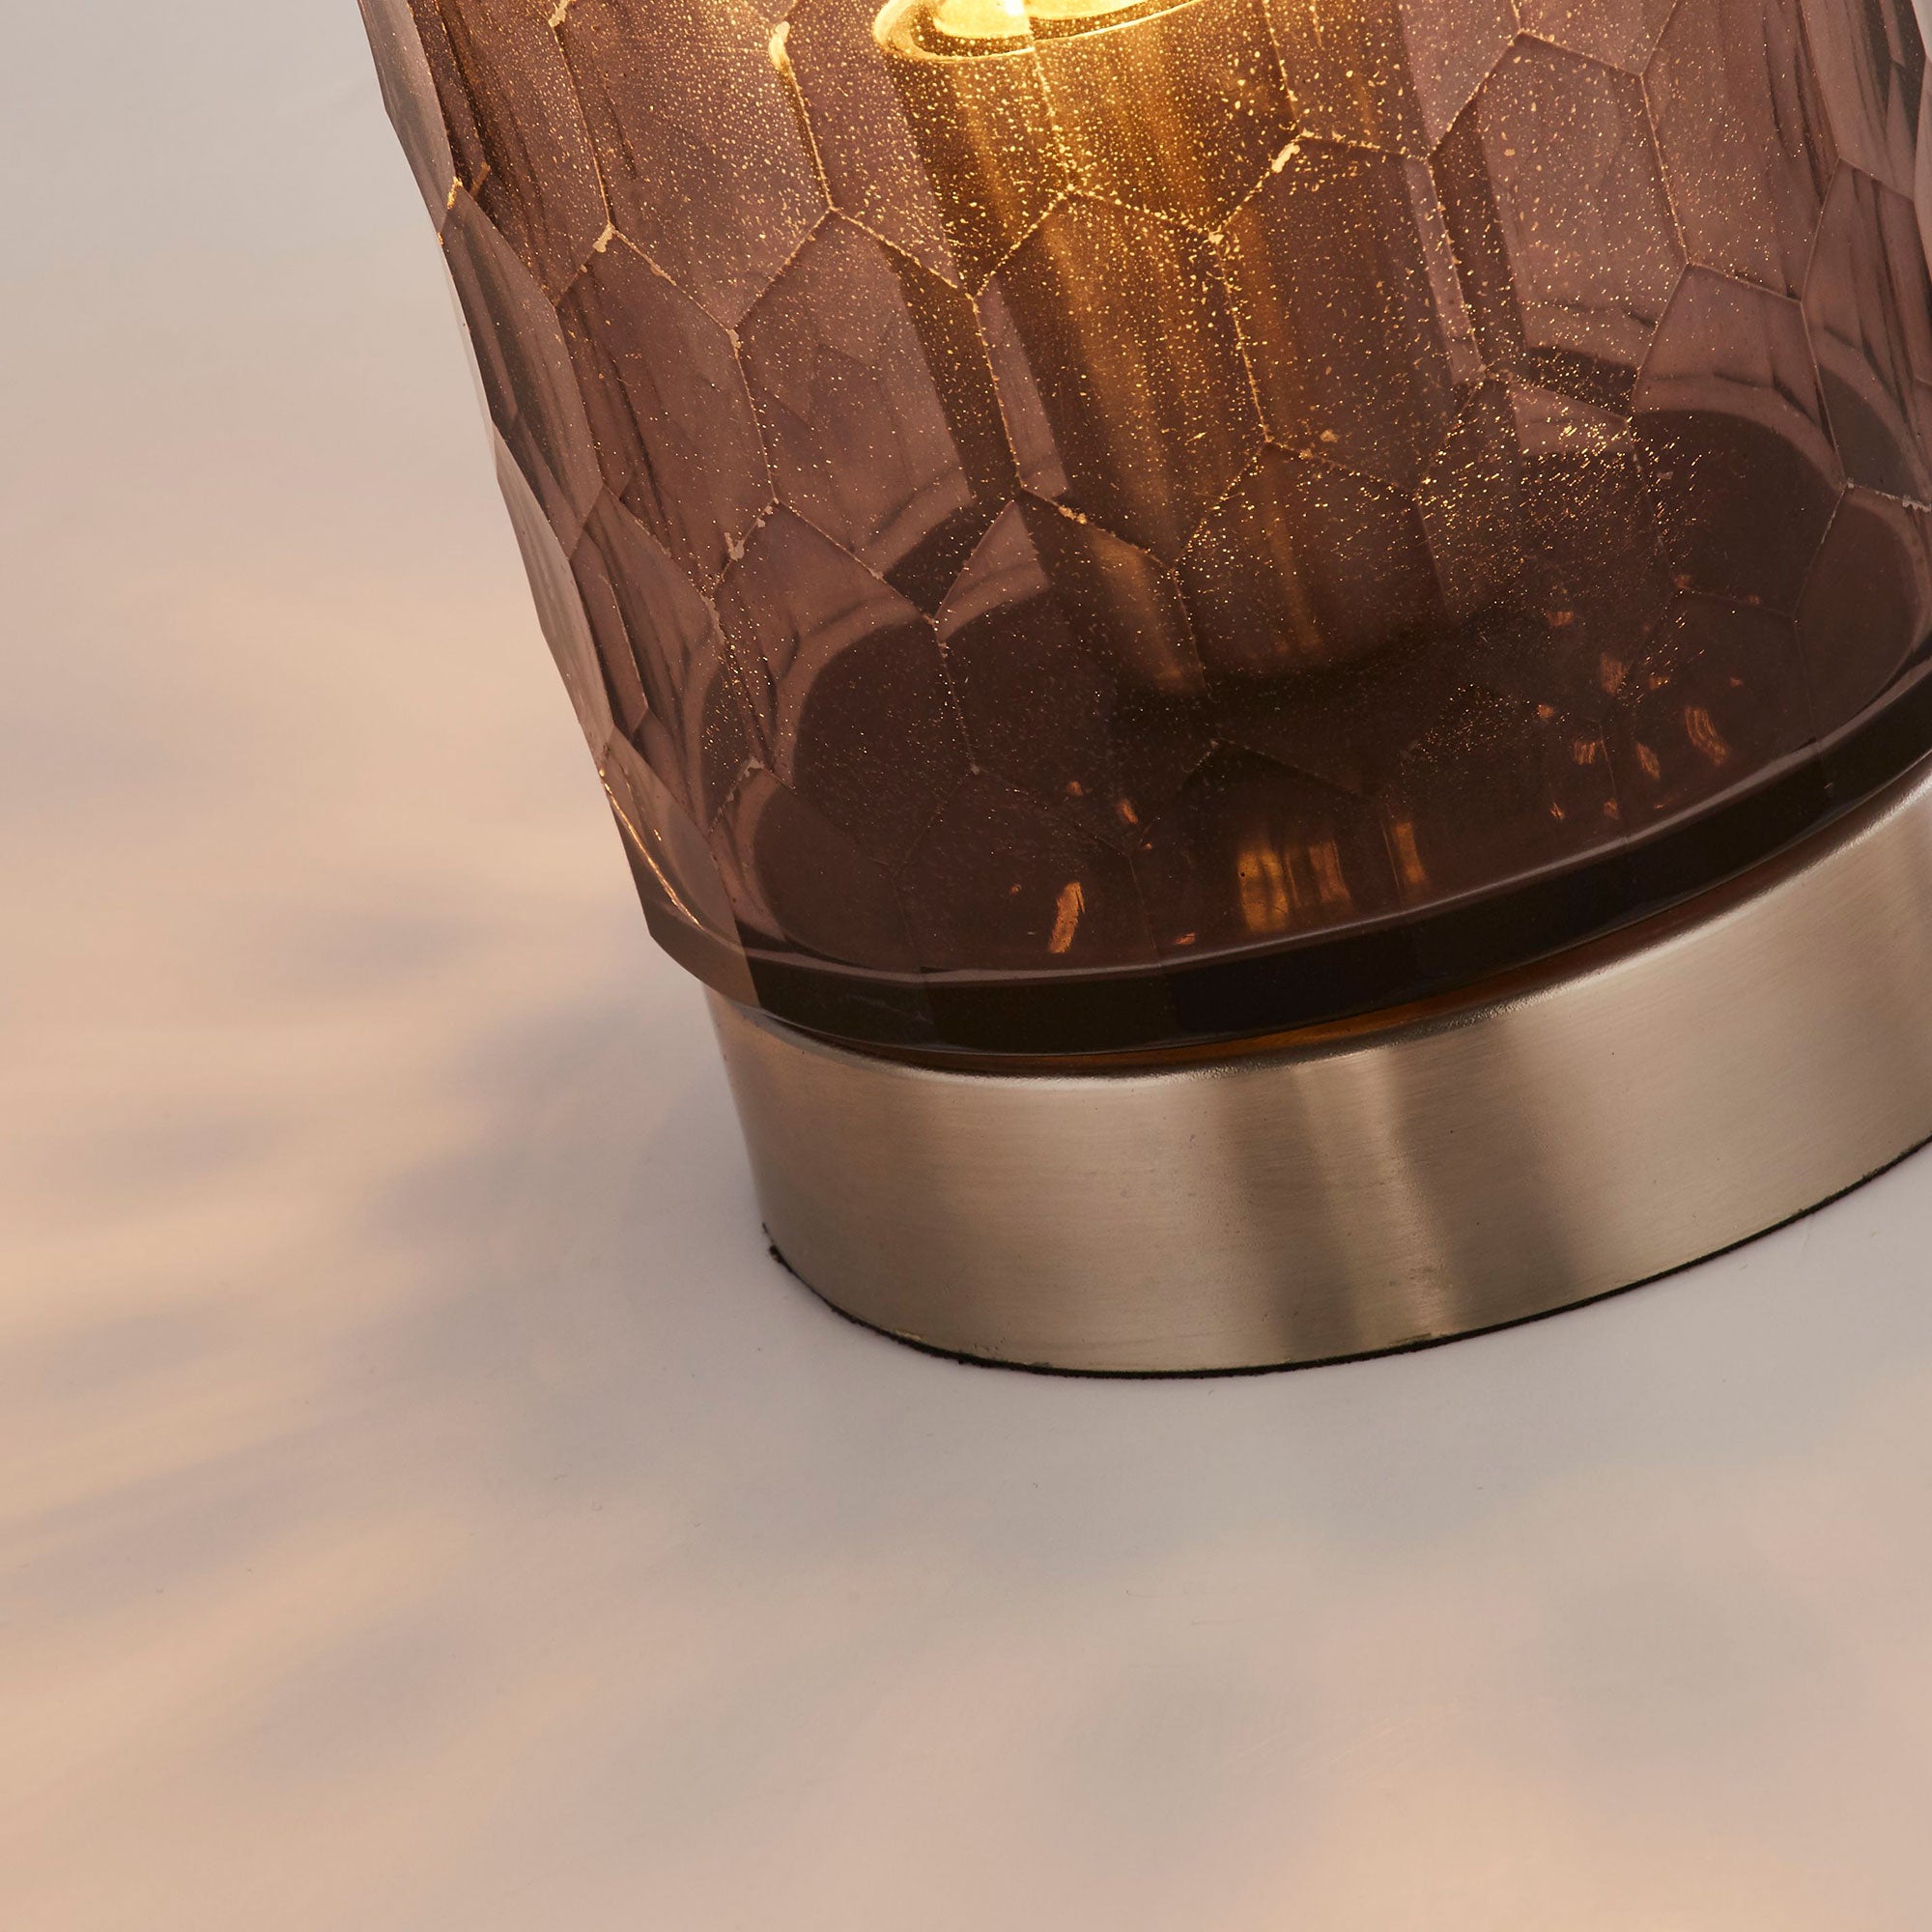 Alexsus - Smoked Table Lamp